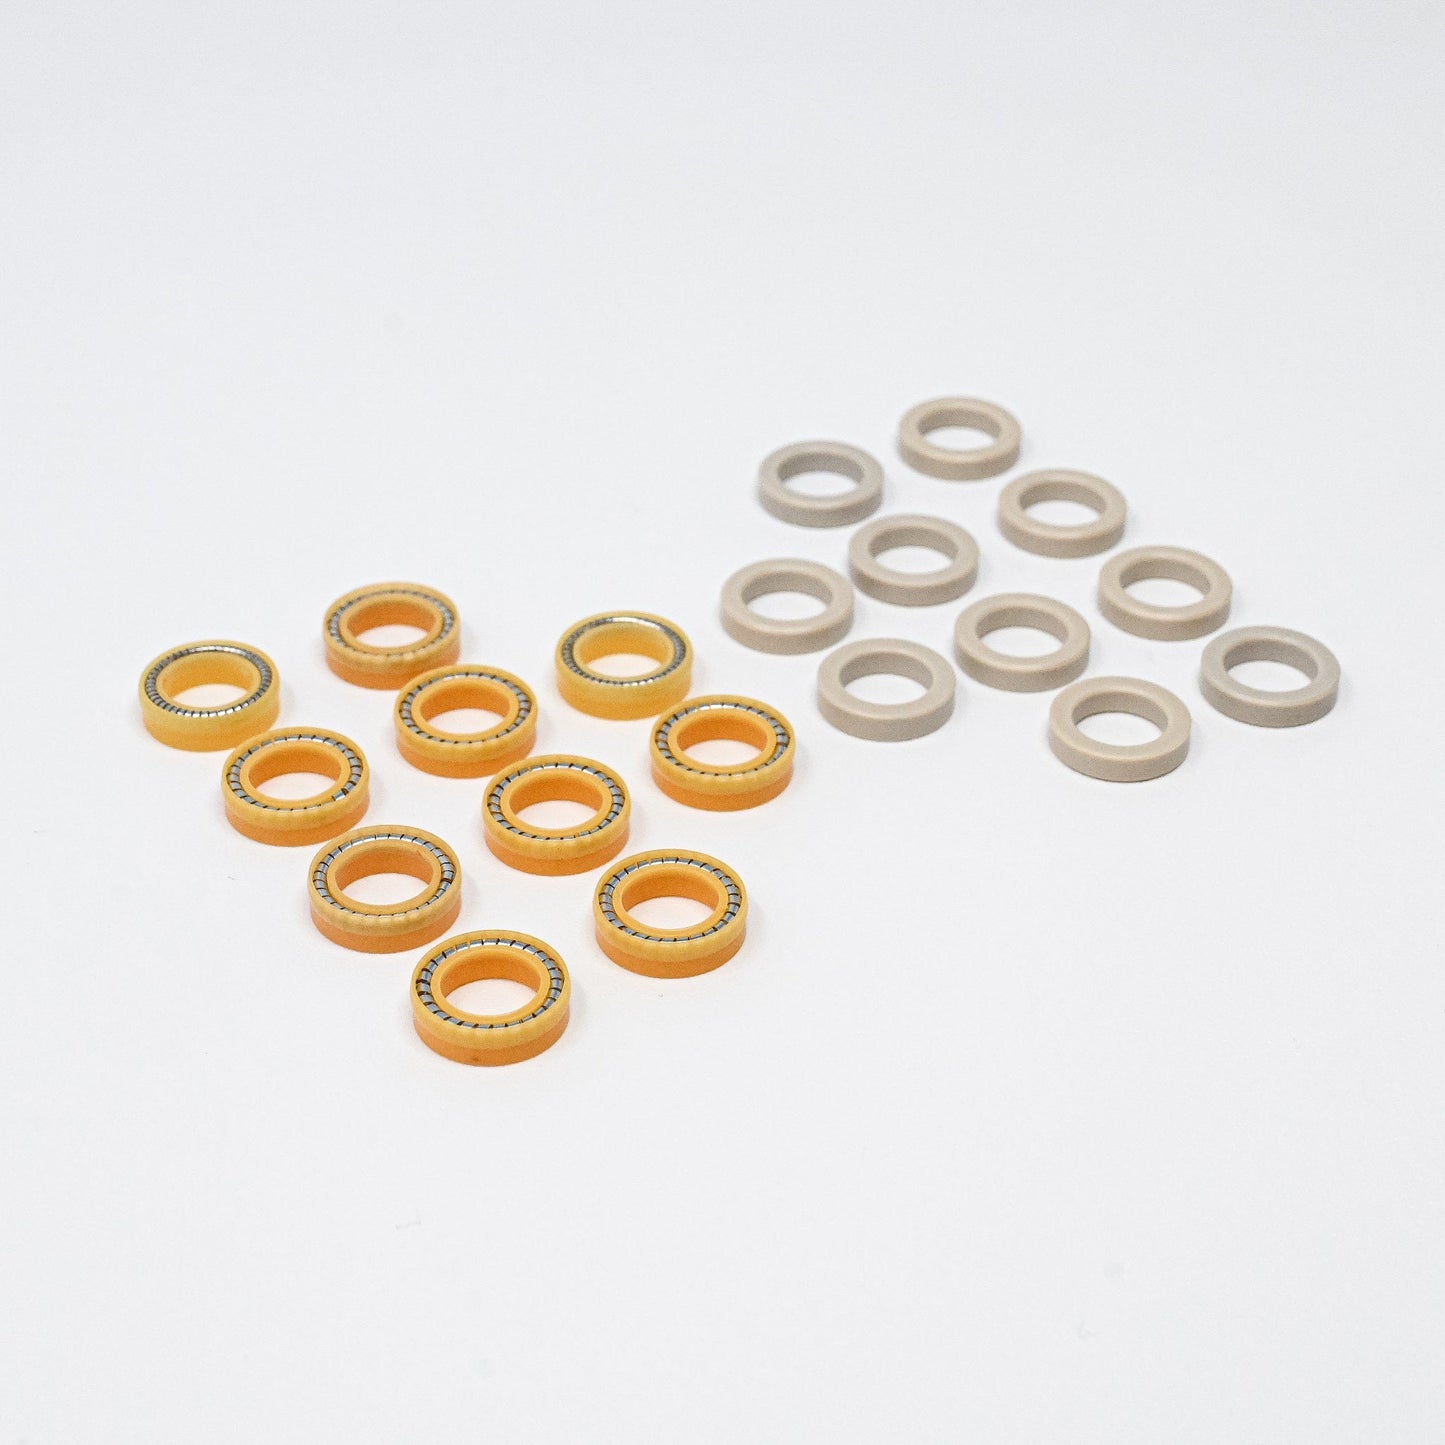 Set of o-rings and seals.